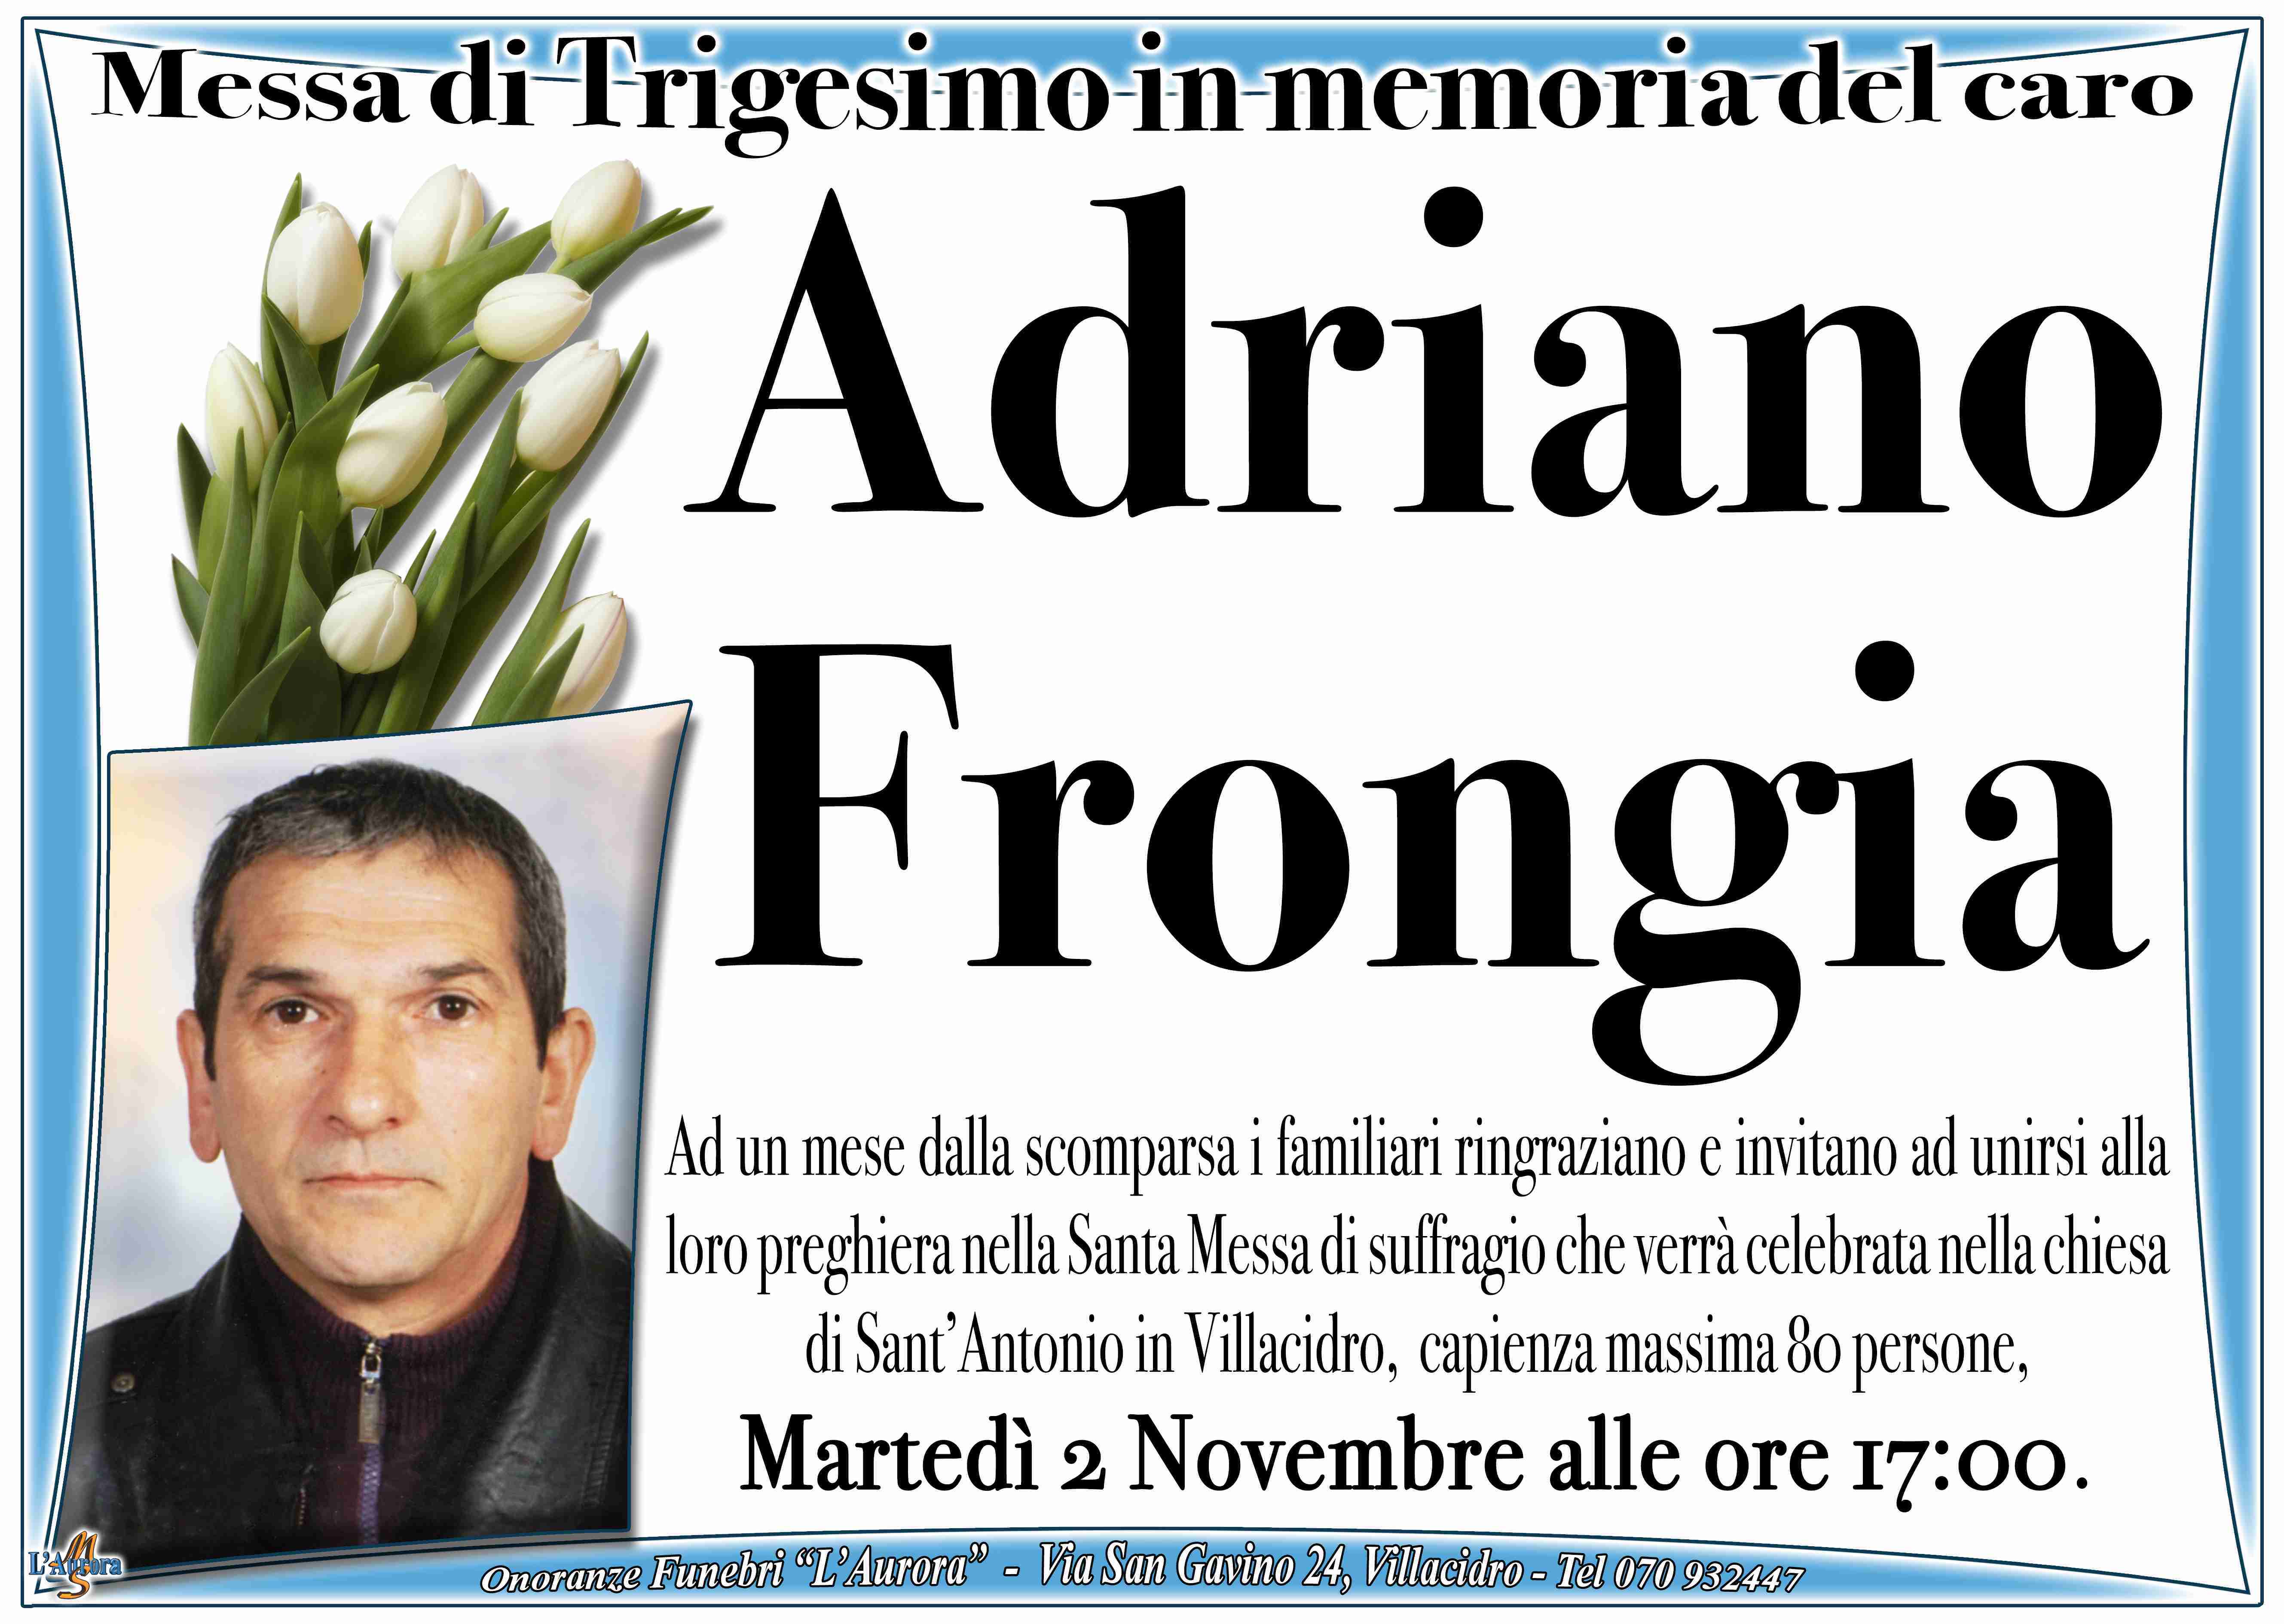 Adriano Frongia